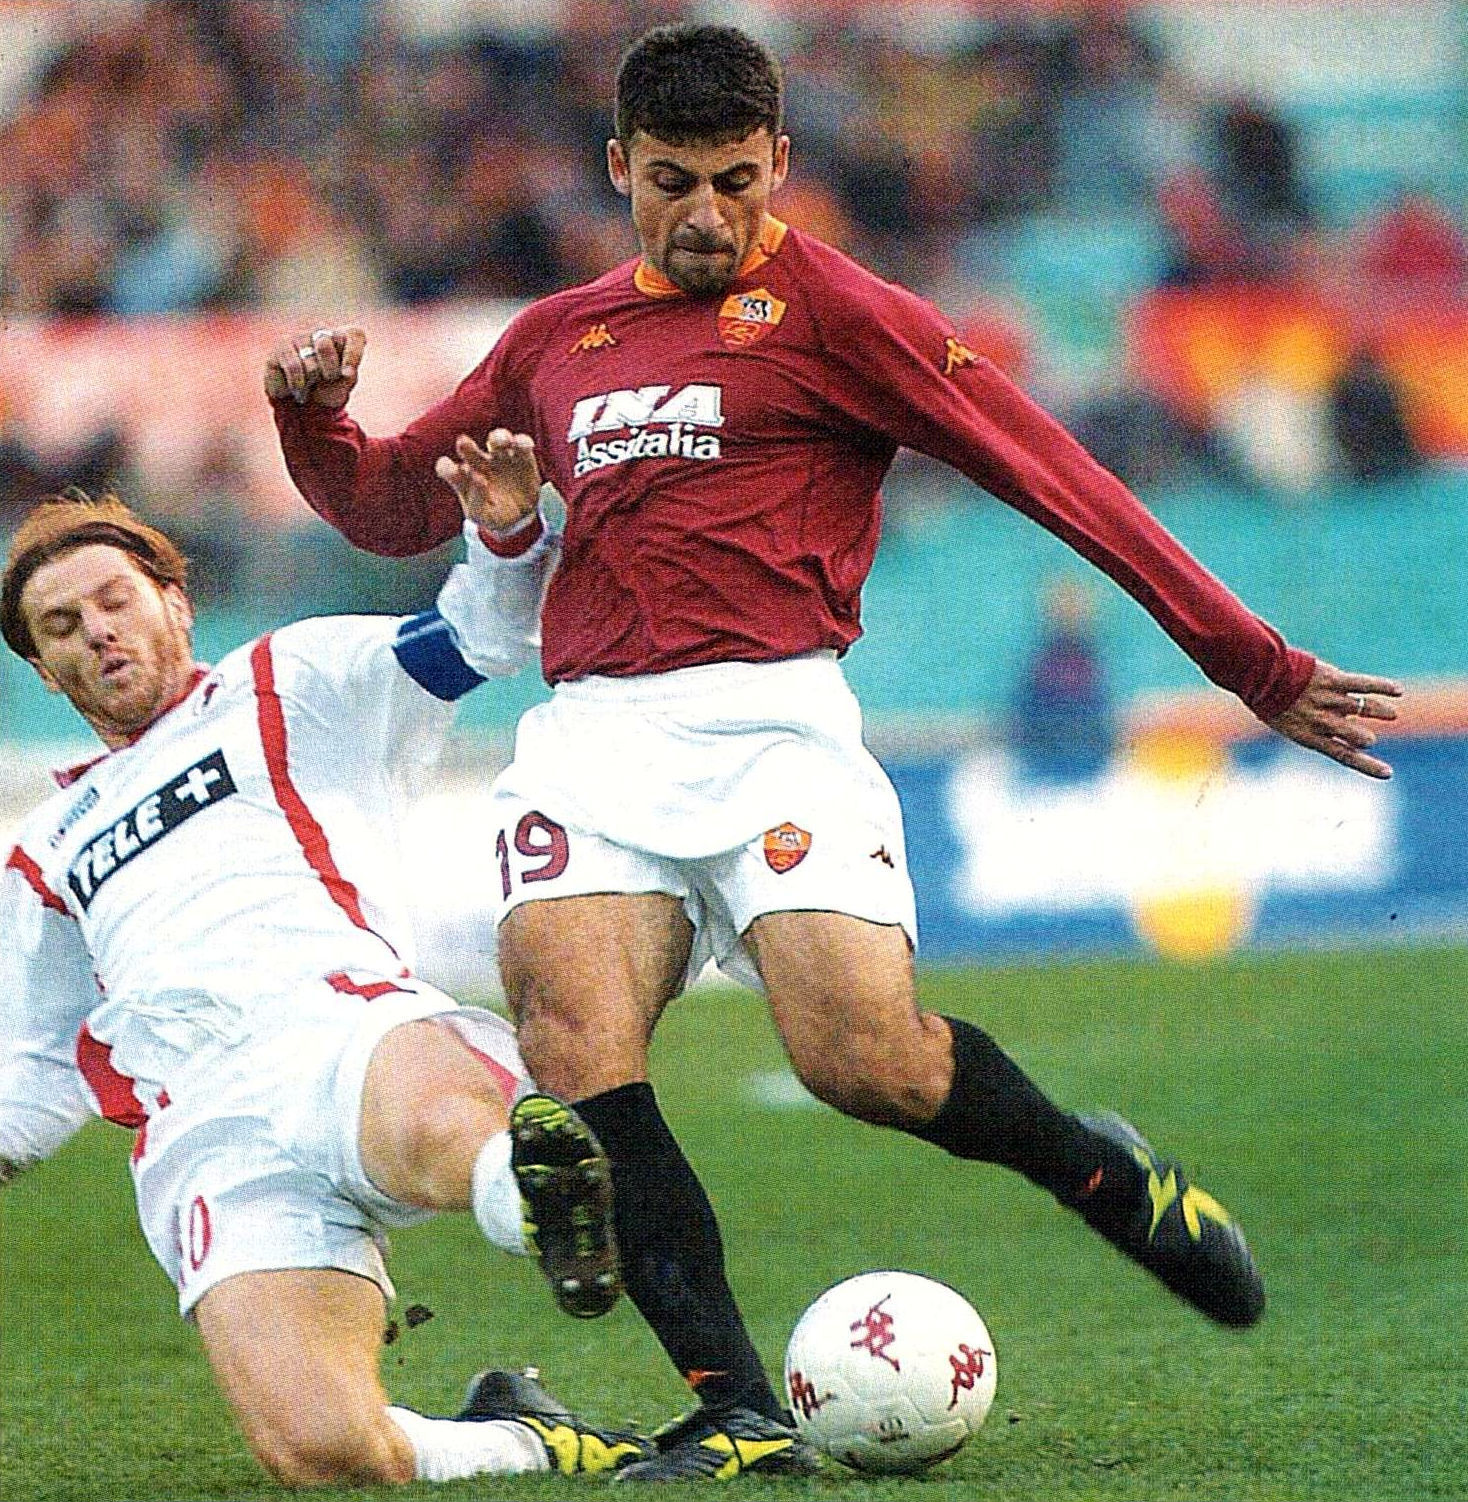 File:Serie A 2000-01 - Roma vs Bari - Walter Samuel.jpg - Wikipedia